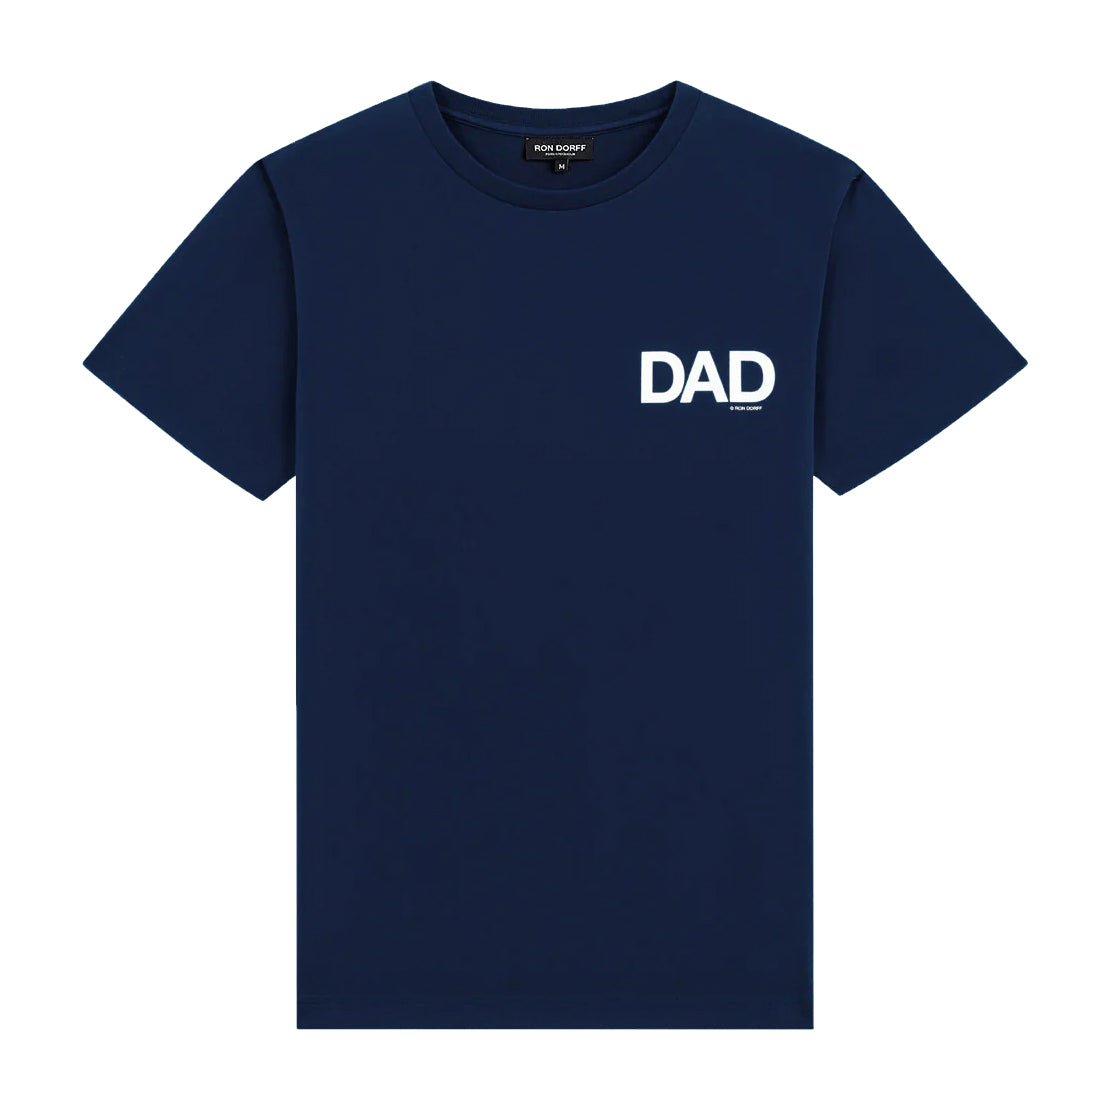 Camiseta DAD navy. Ron Dorff